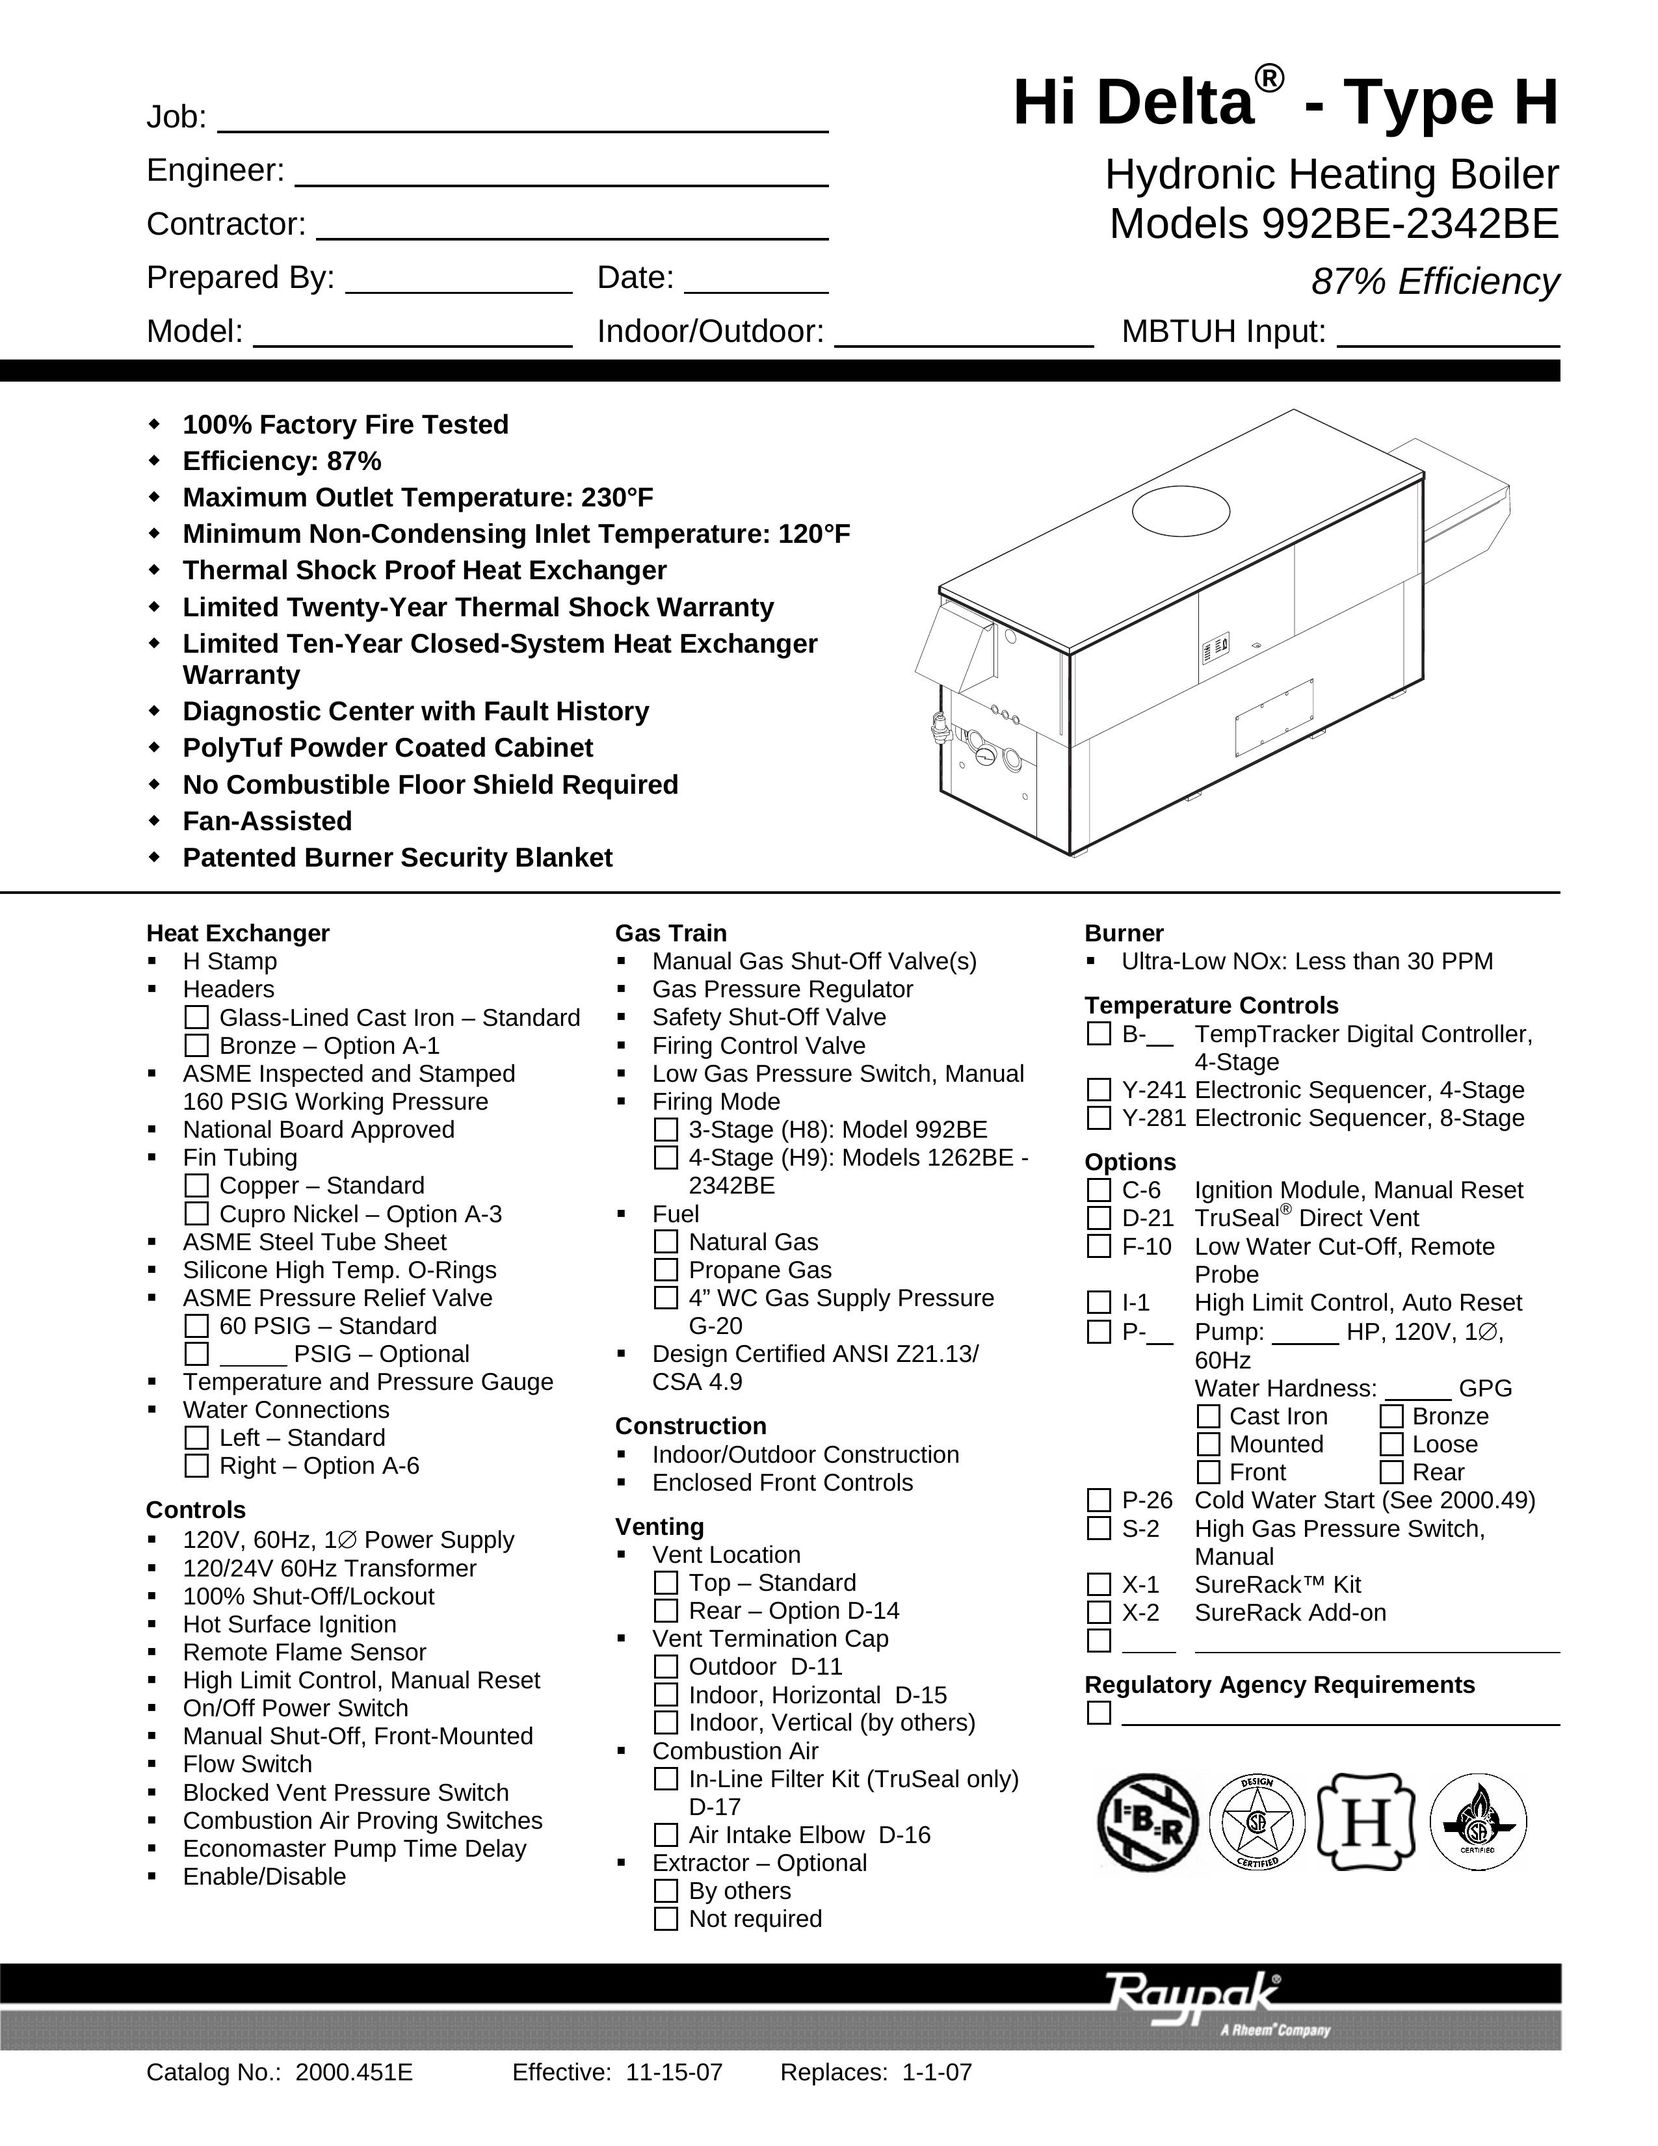 Raypak 992BE-2342BE Water Heater User Manual